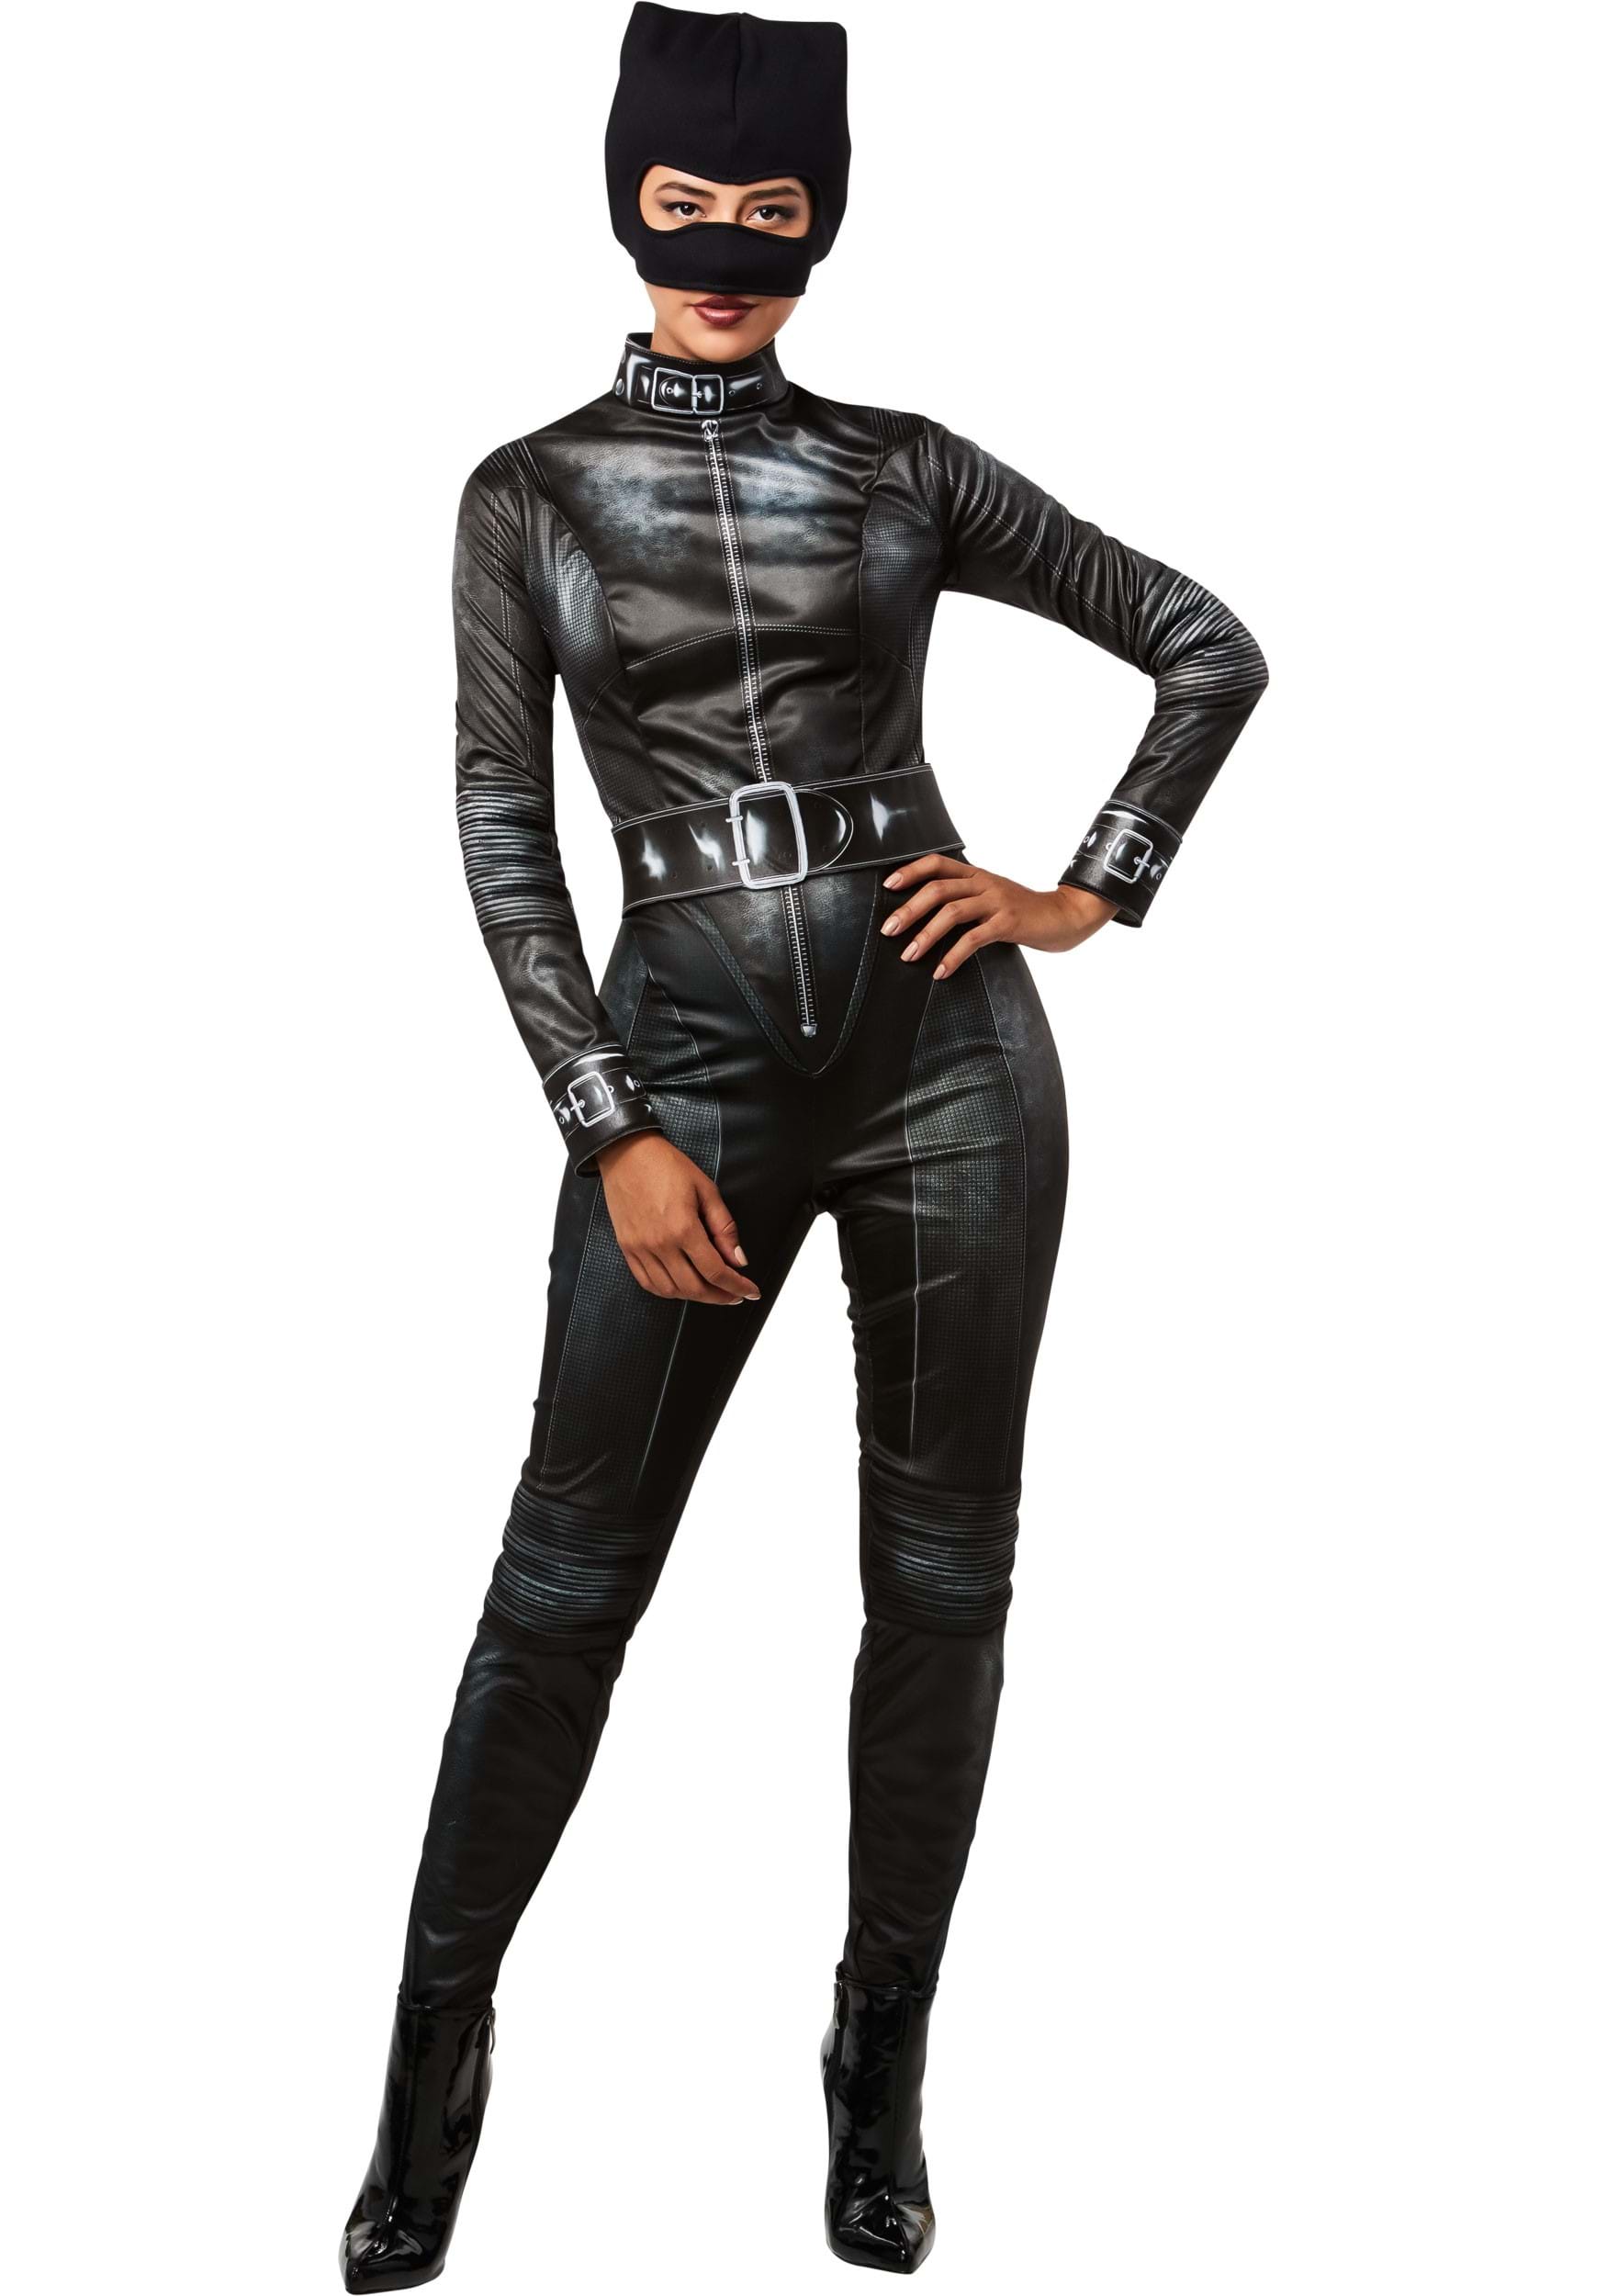 The Batman Selina Kyle Costume For Women